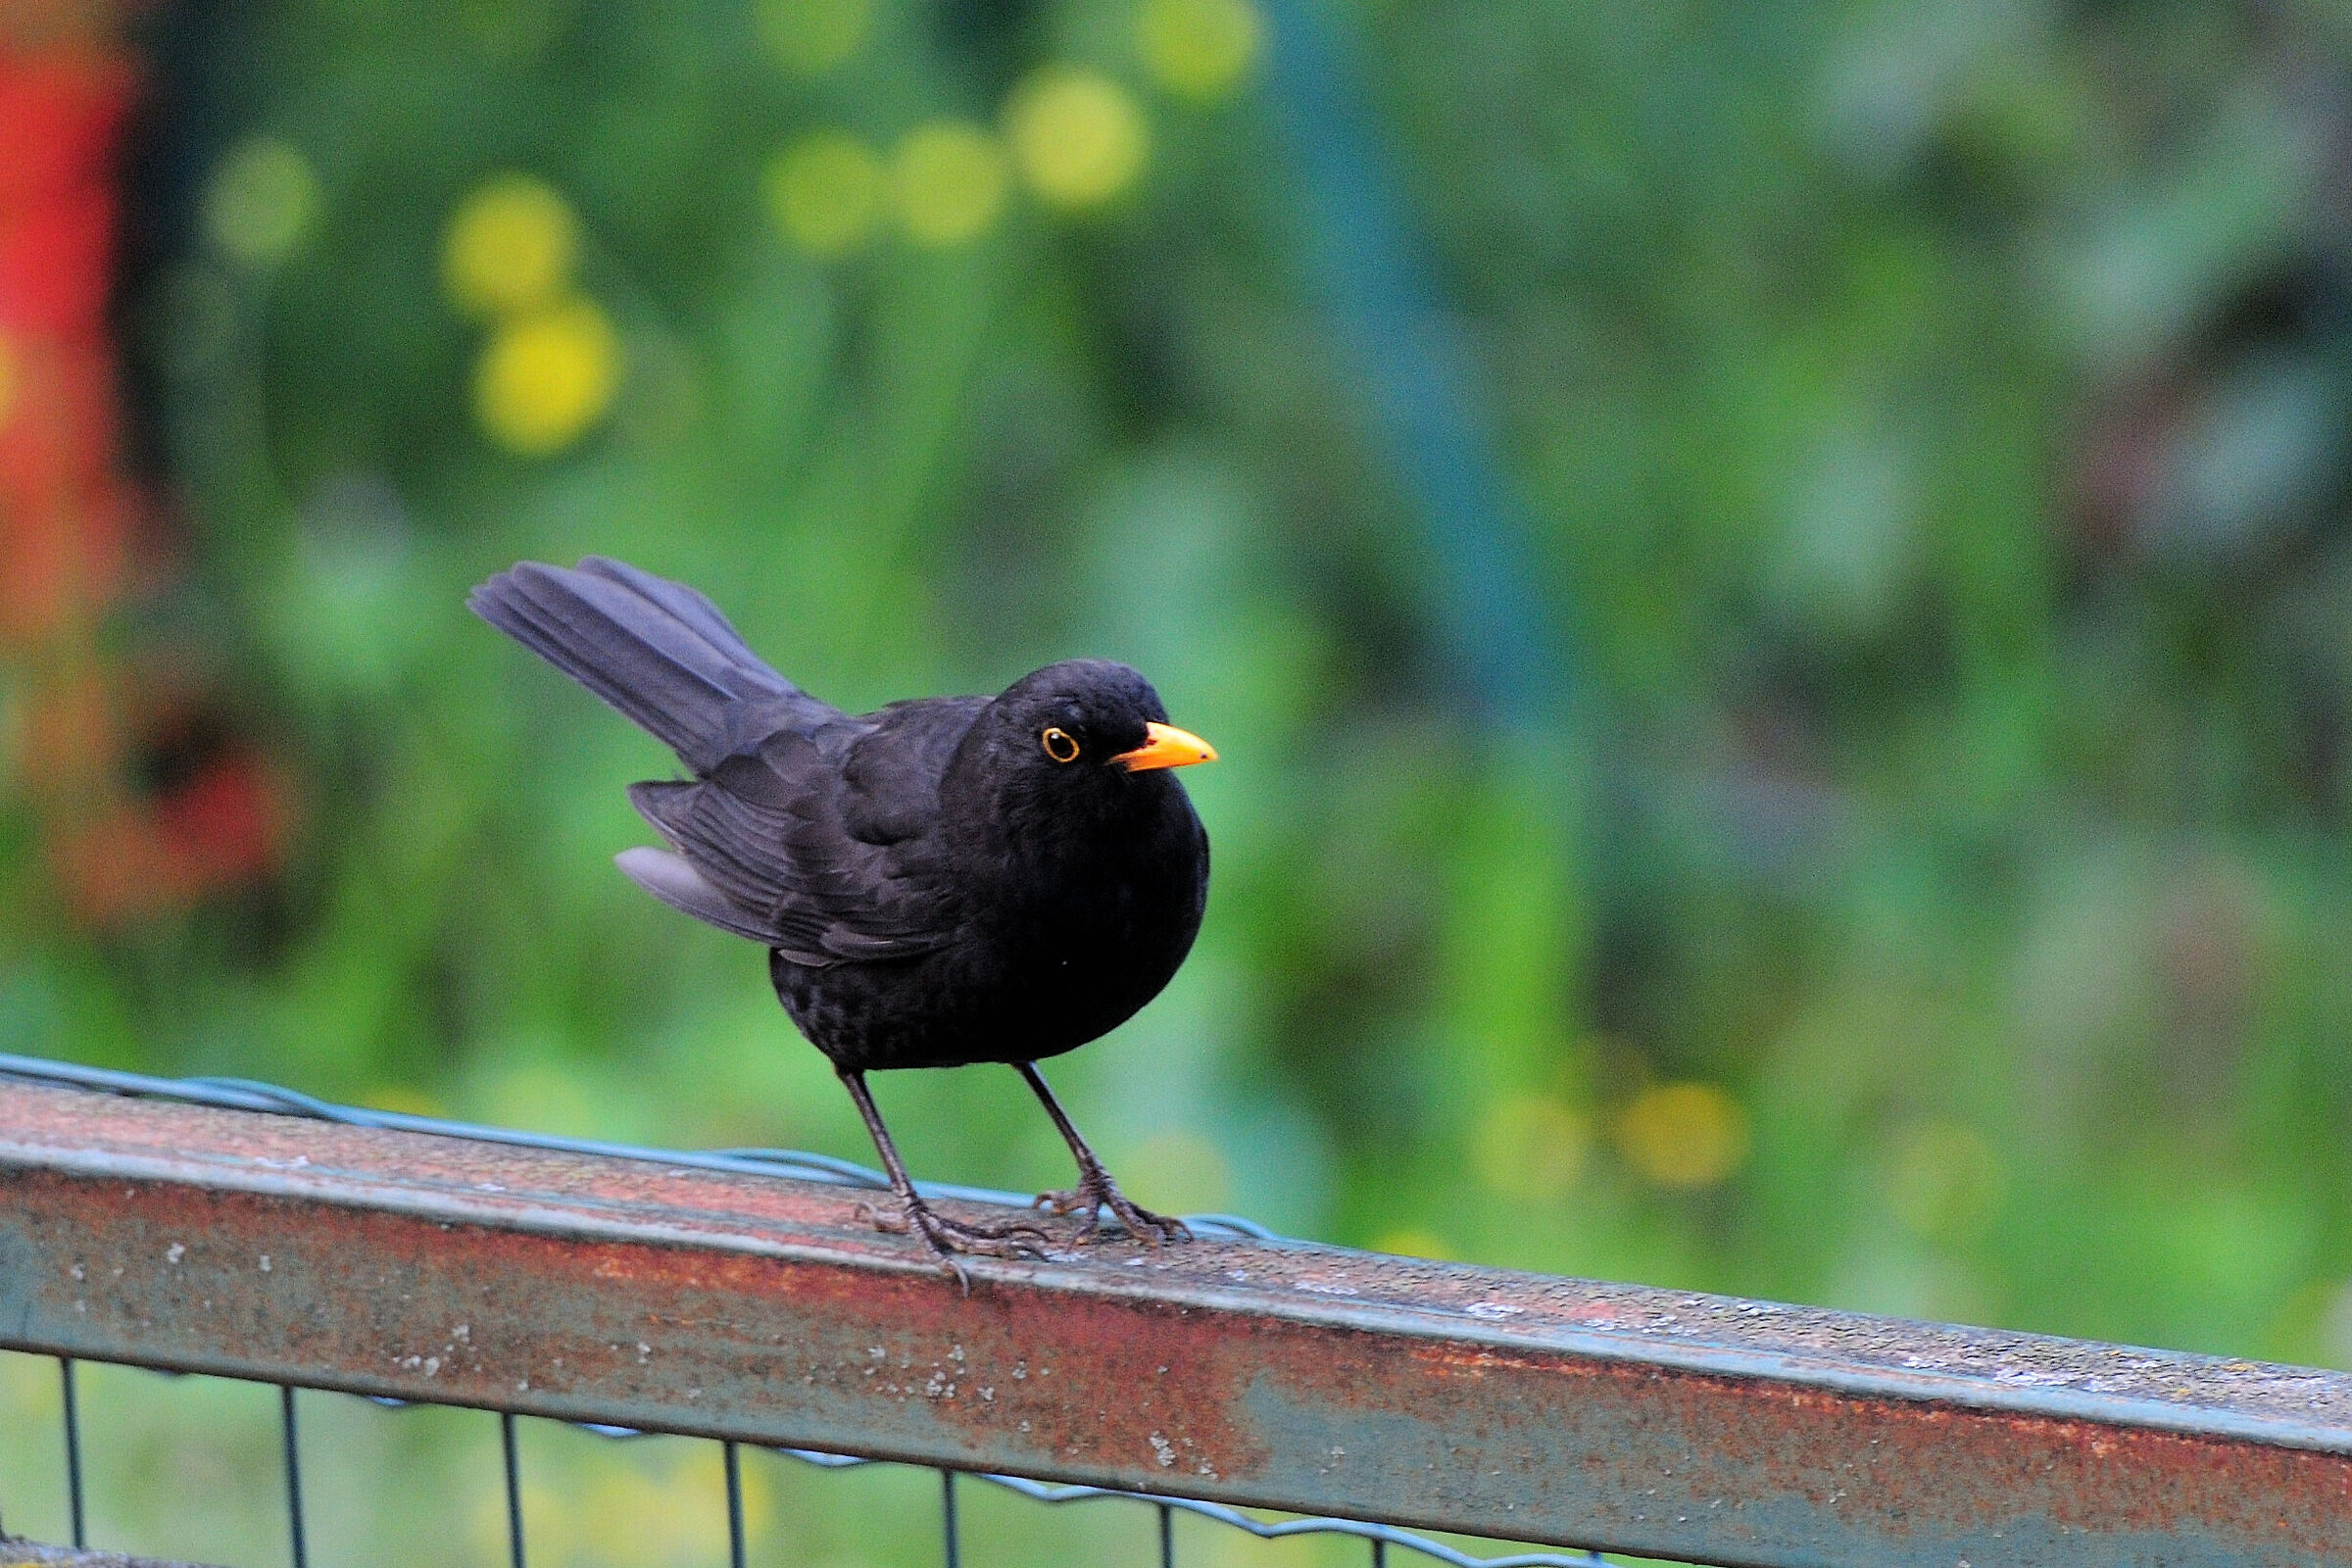 The Blackbird...